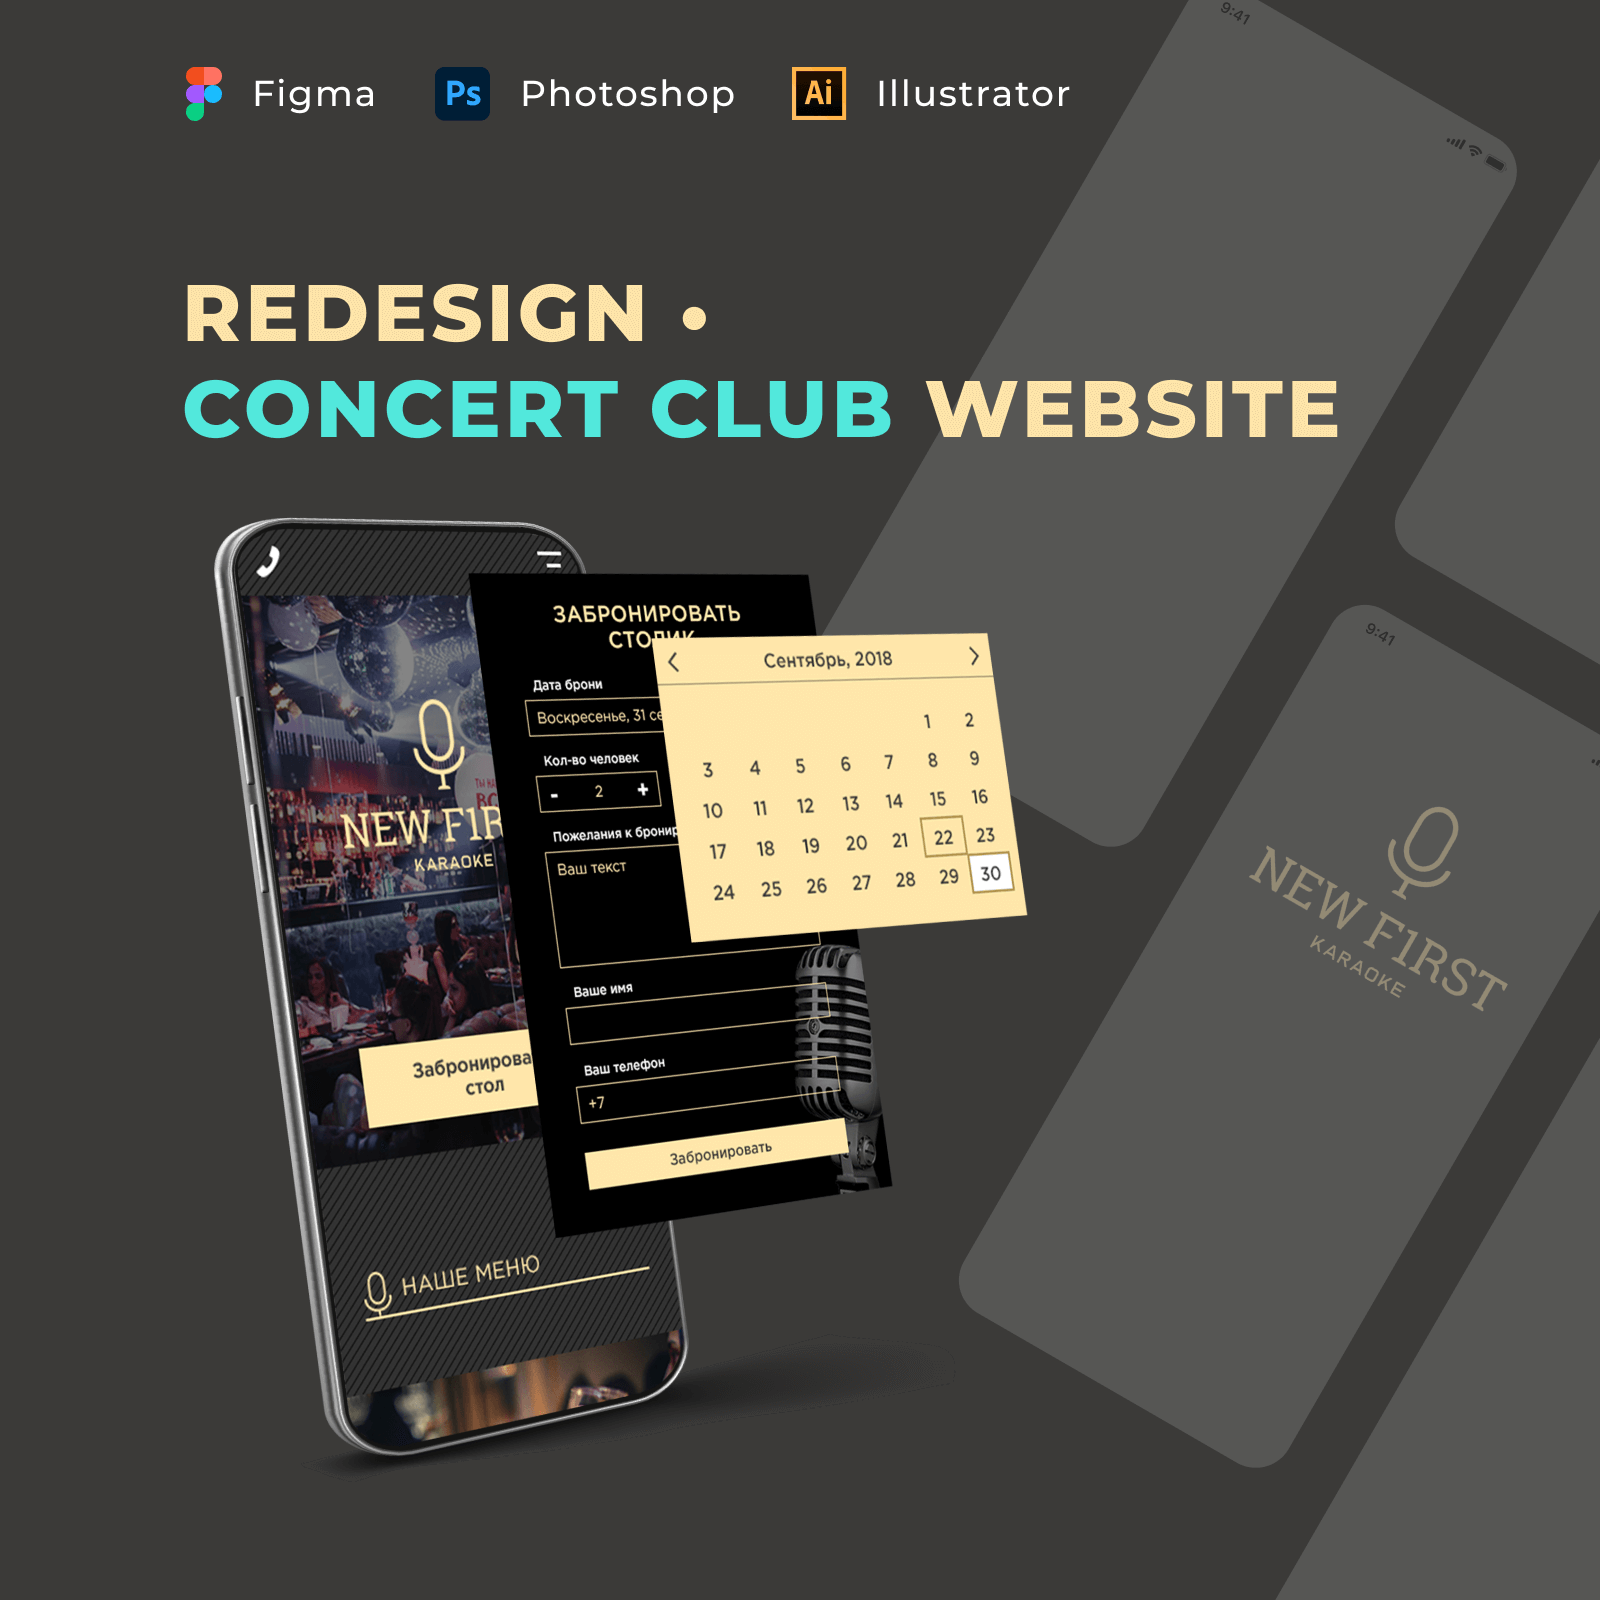 Redesign. Concert club website